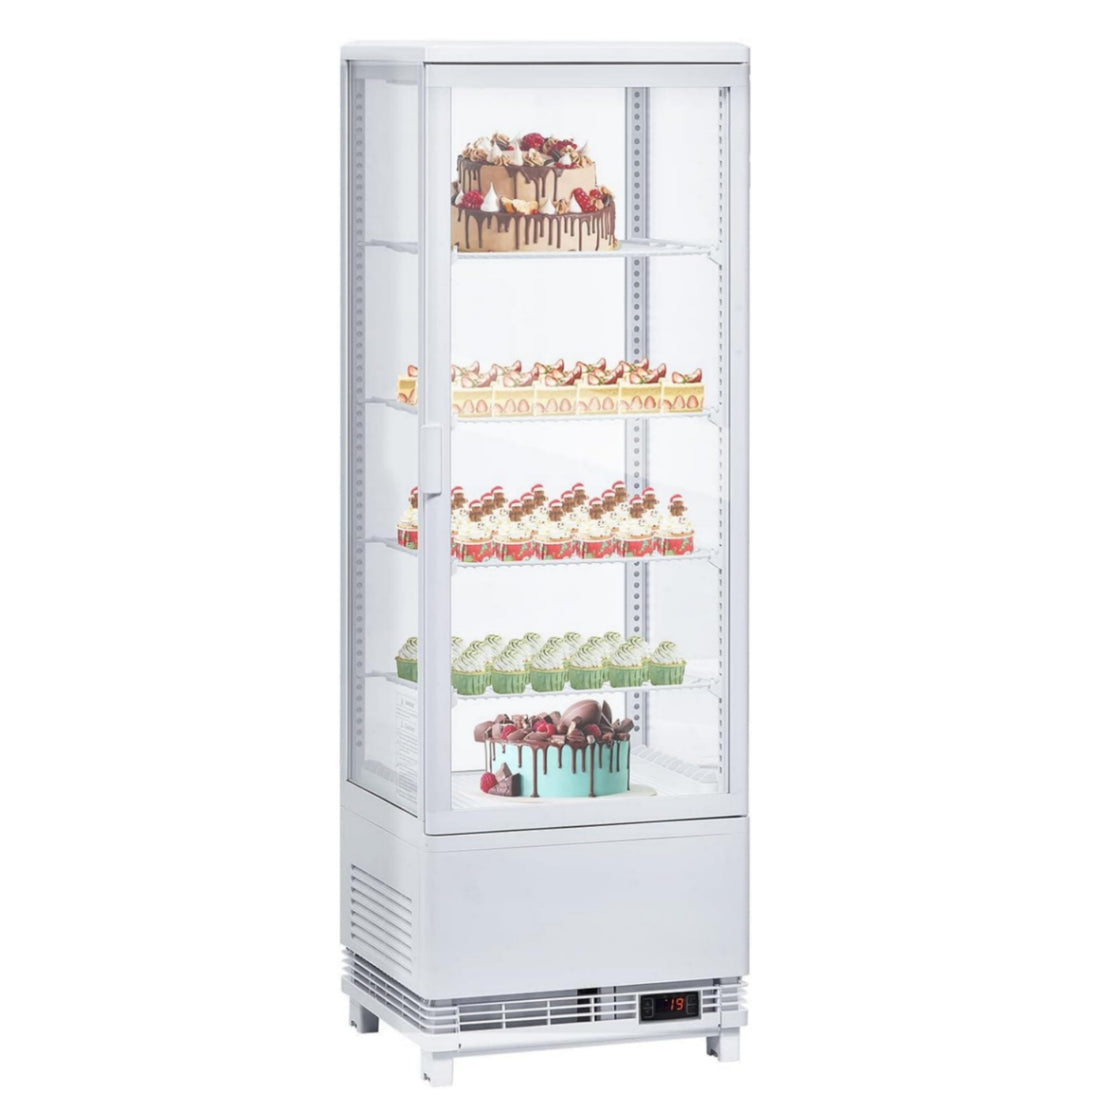 Commercial Cake Display Refrigerator, 110v 4.2 Cu.FT Single-Door Merchandiser with Interior LED Lighting, Double-Layered Glass, Countertop/Floor Refrigerator